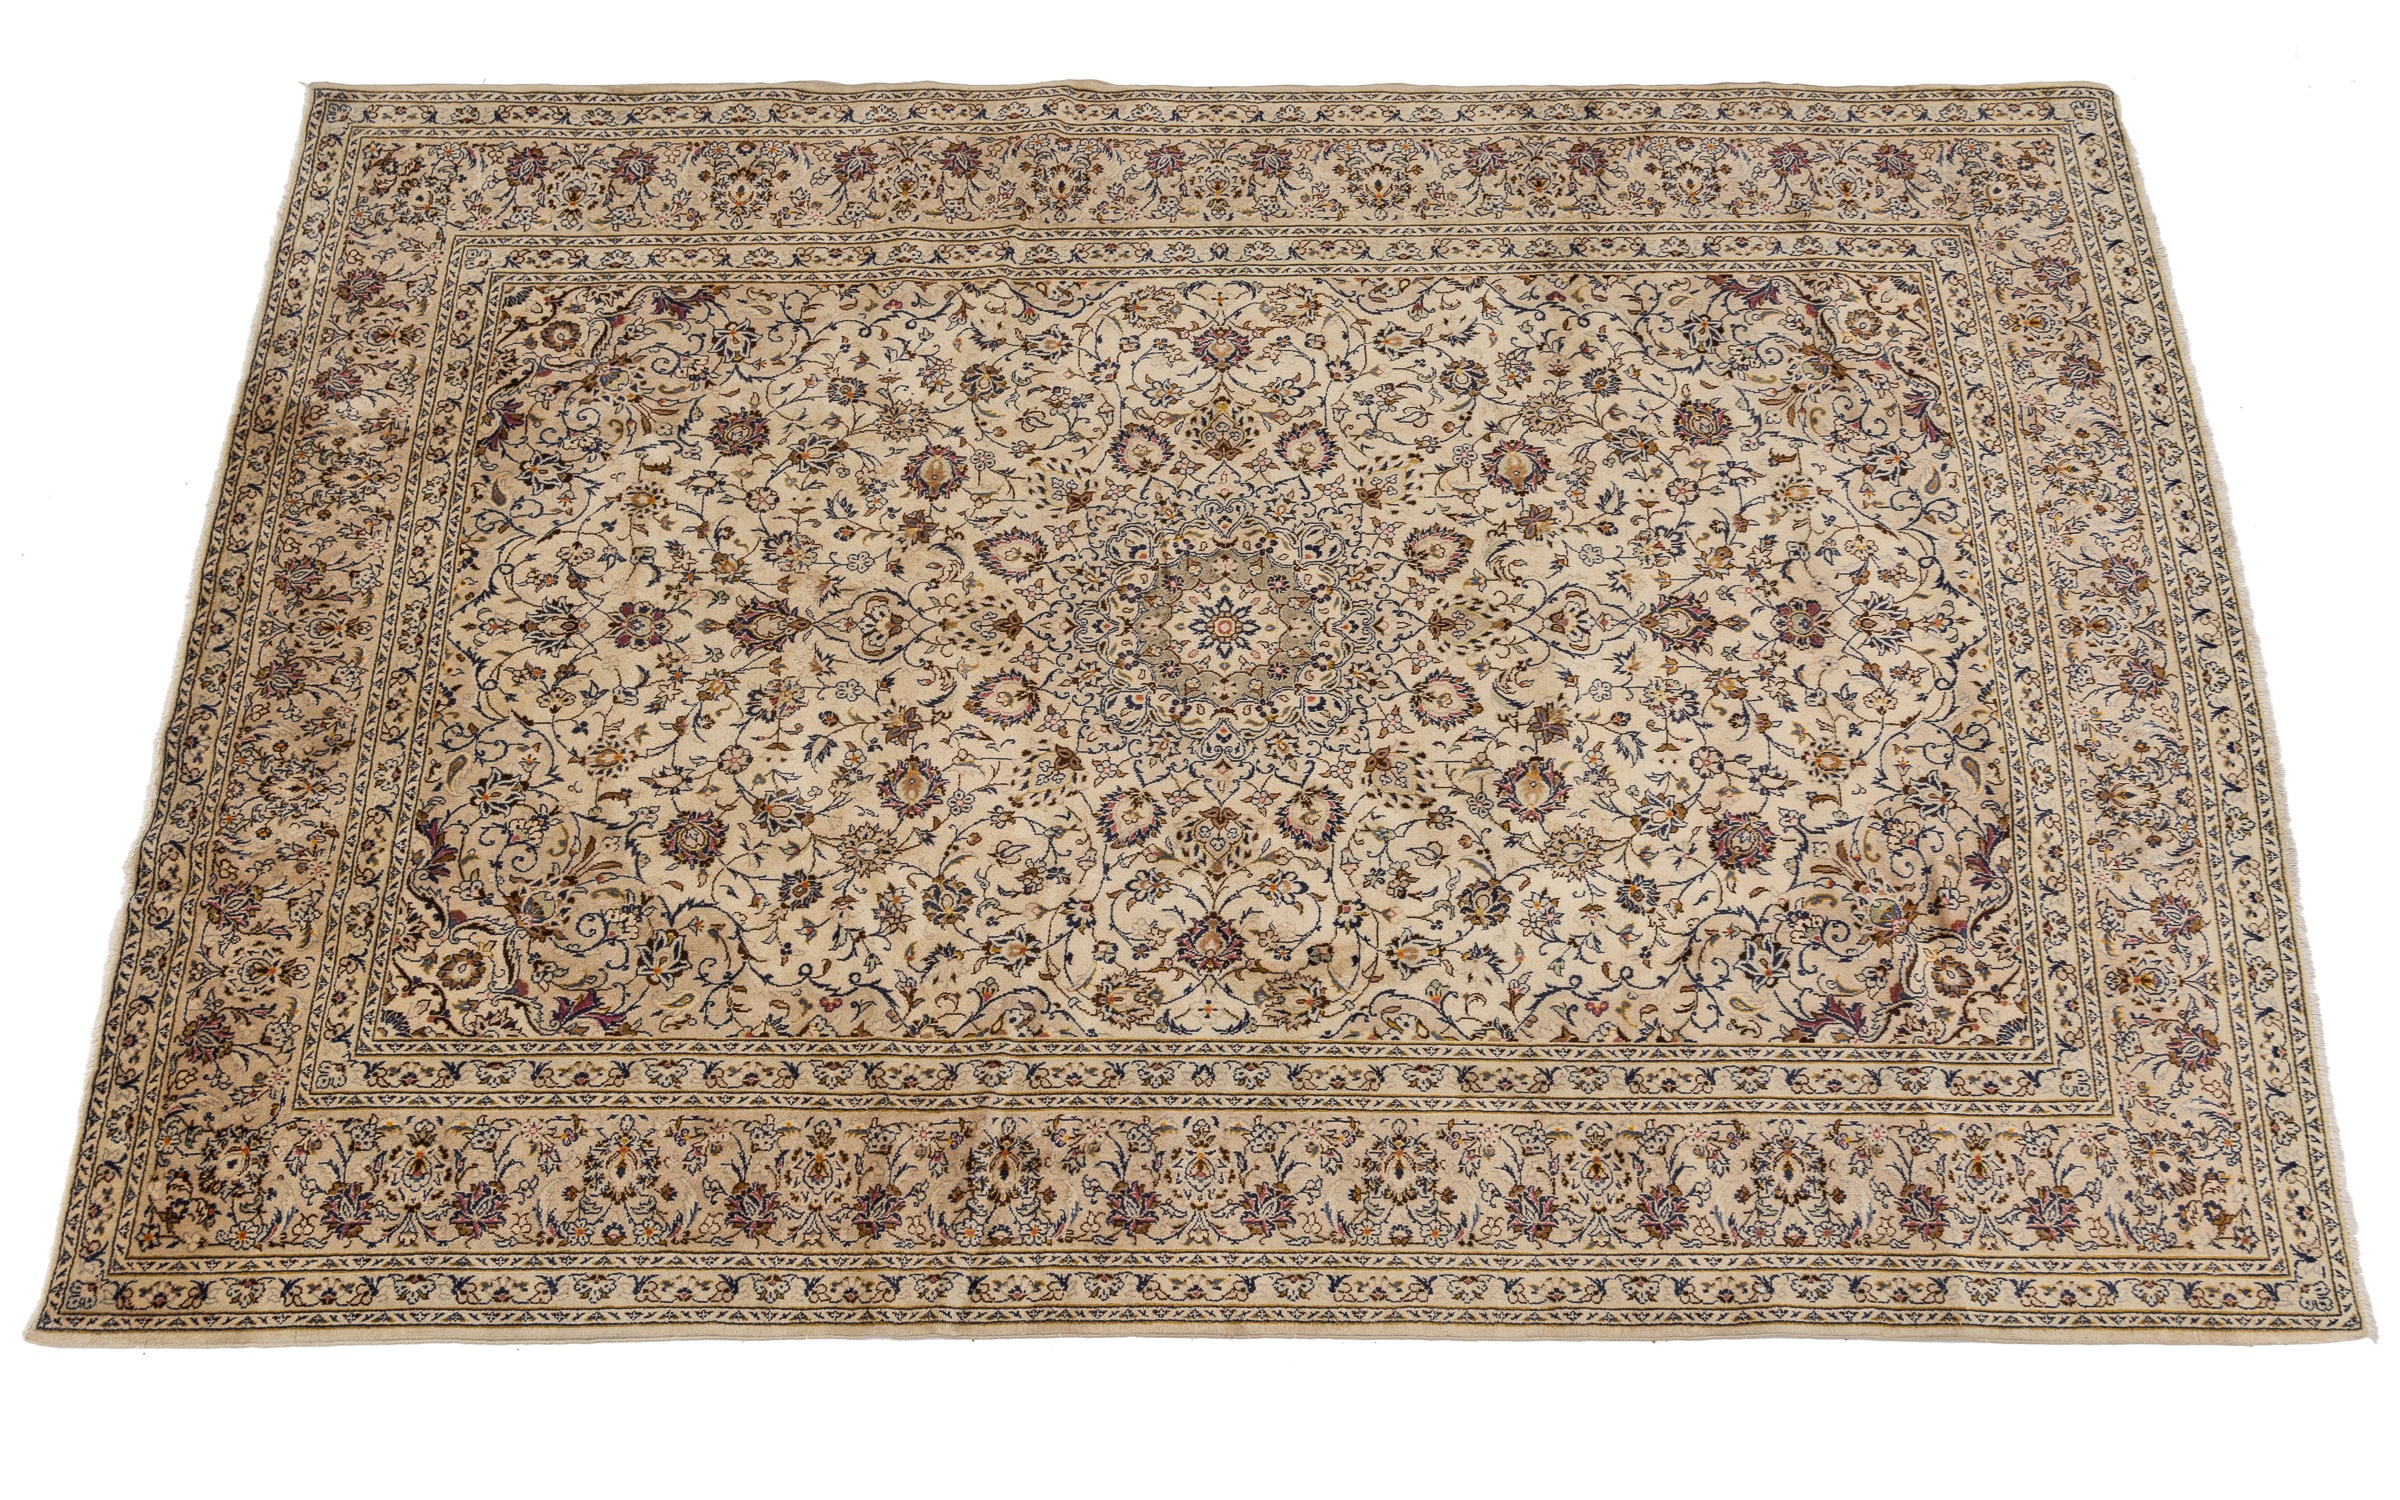 A modern machine-woven Kashan carpet